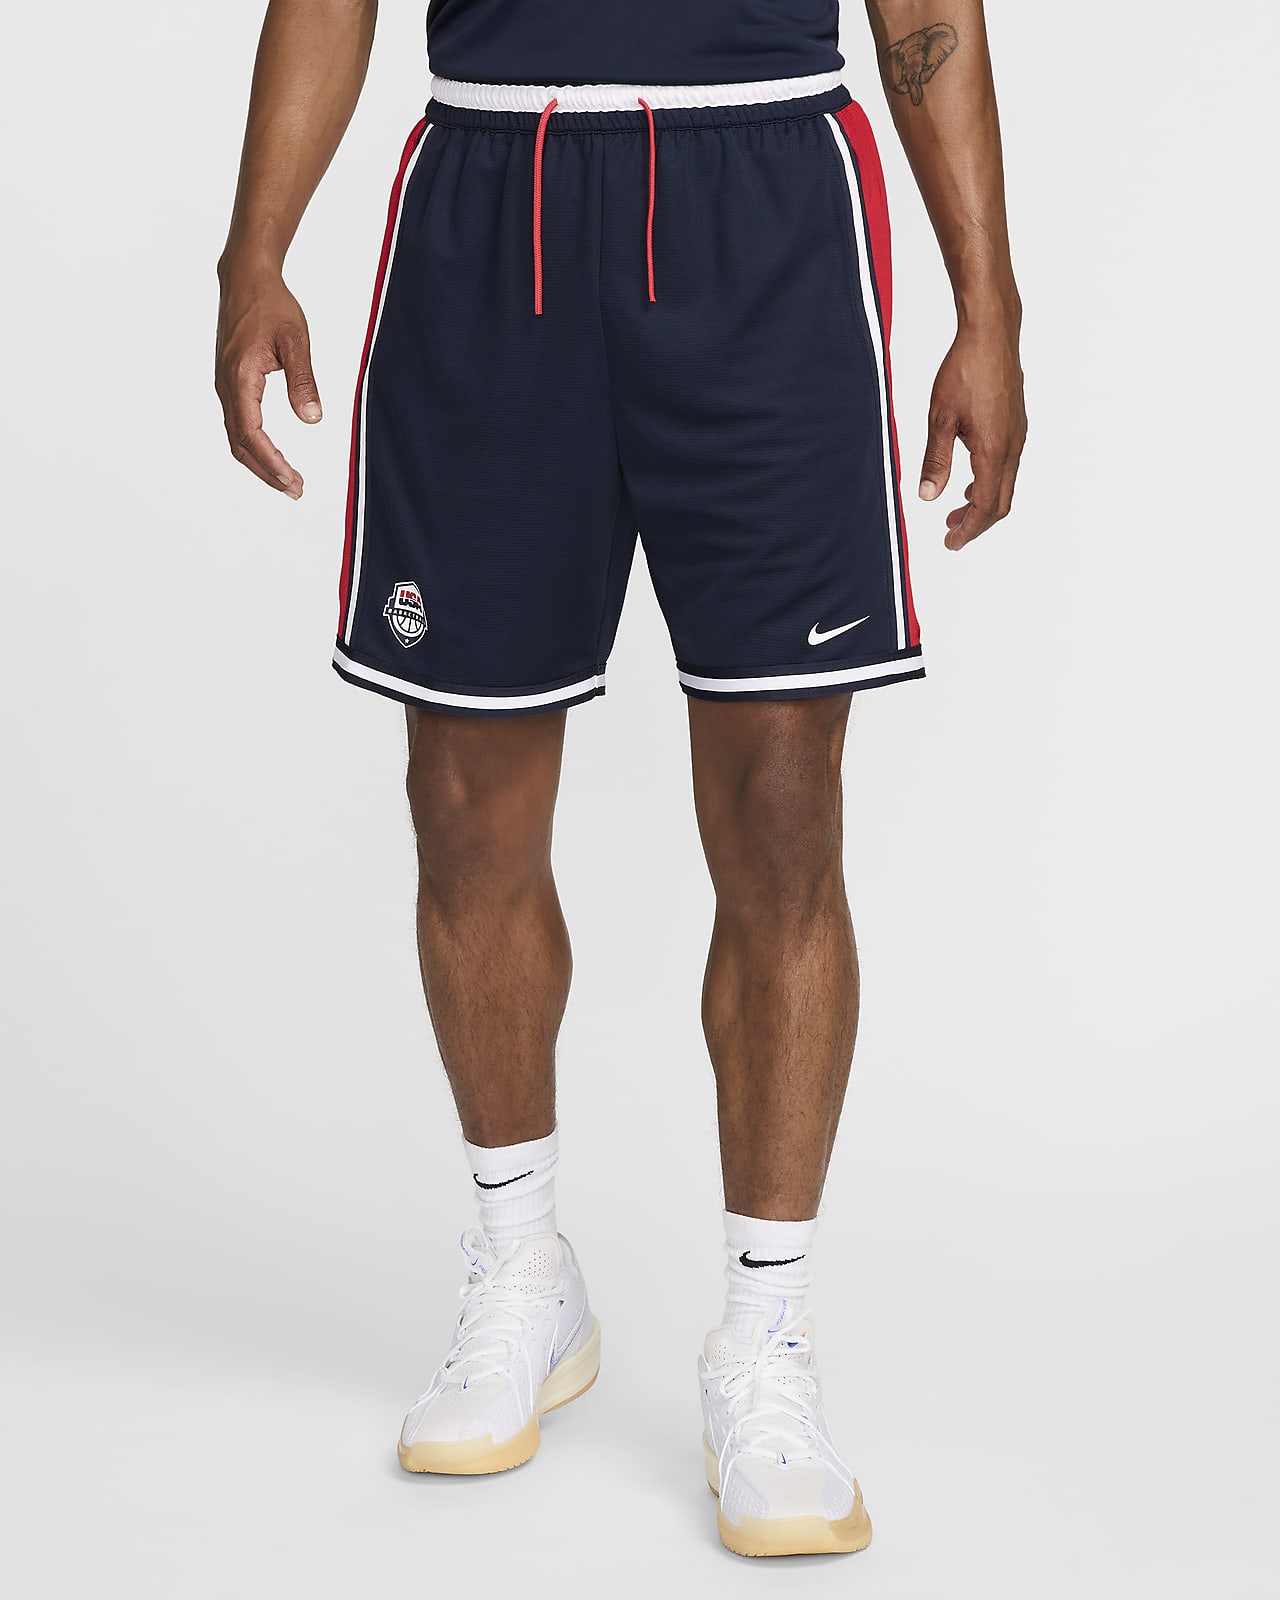 USAB Men's Nike Basketball Pregame Shorts